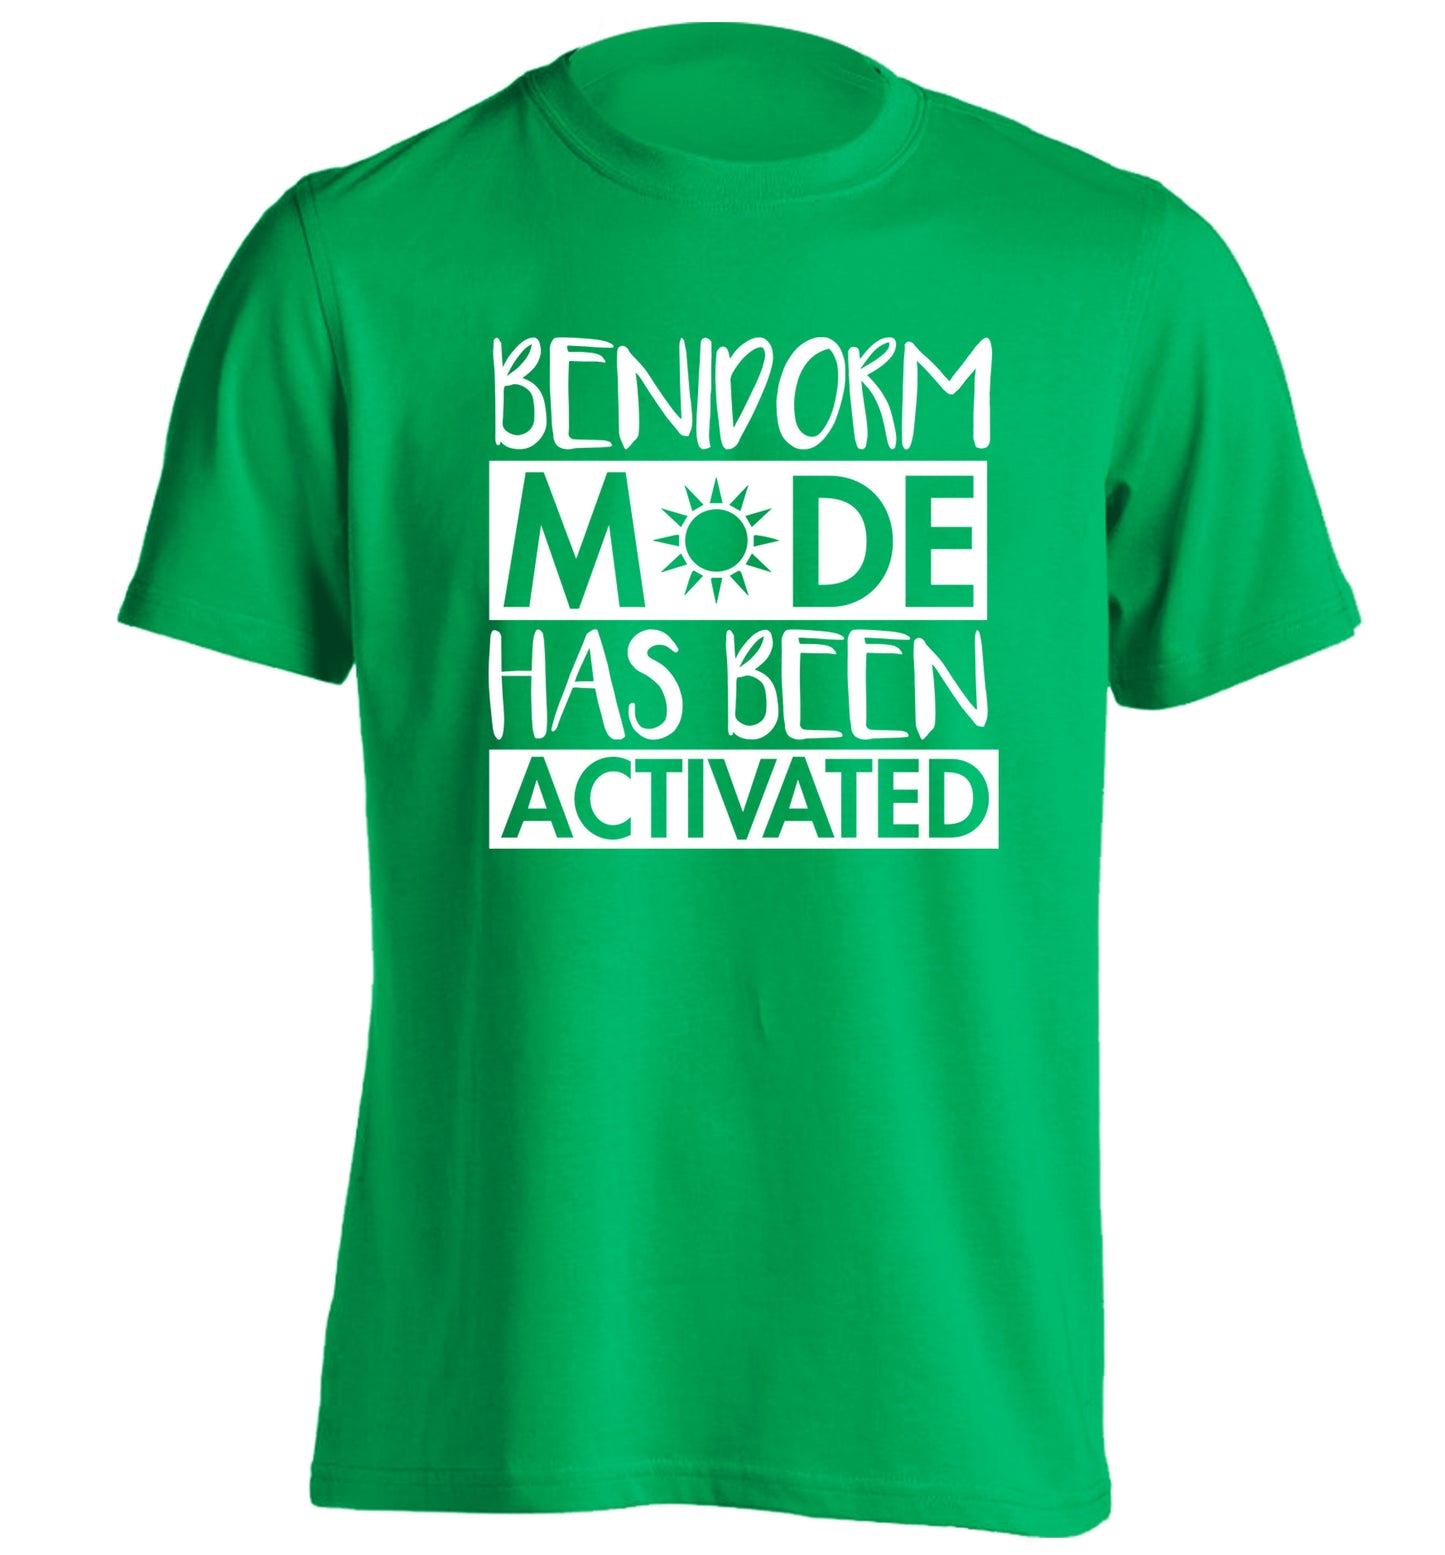 Benidorm mode has been activated adults unisex green Tshirt 2XL